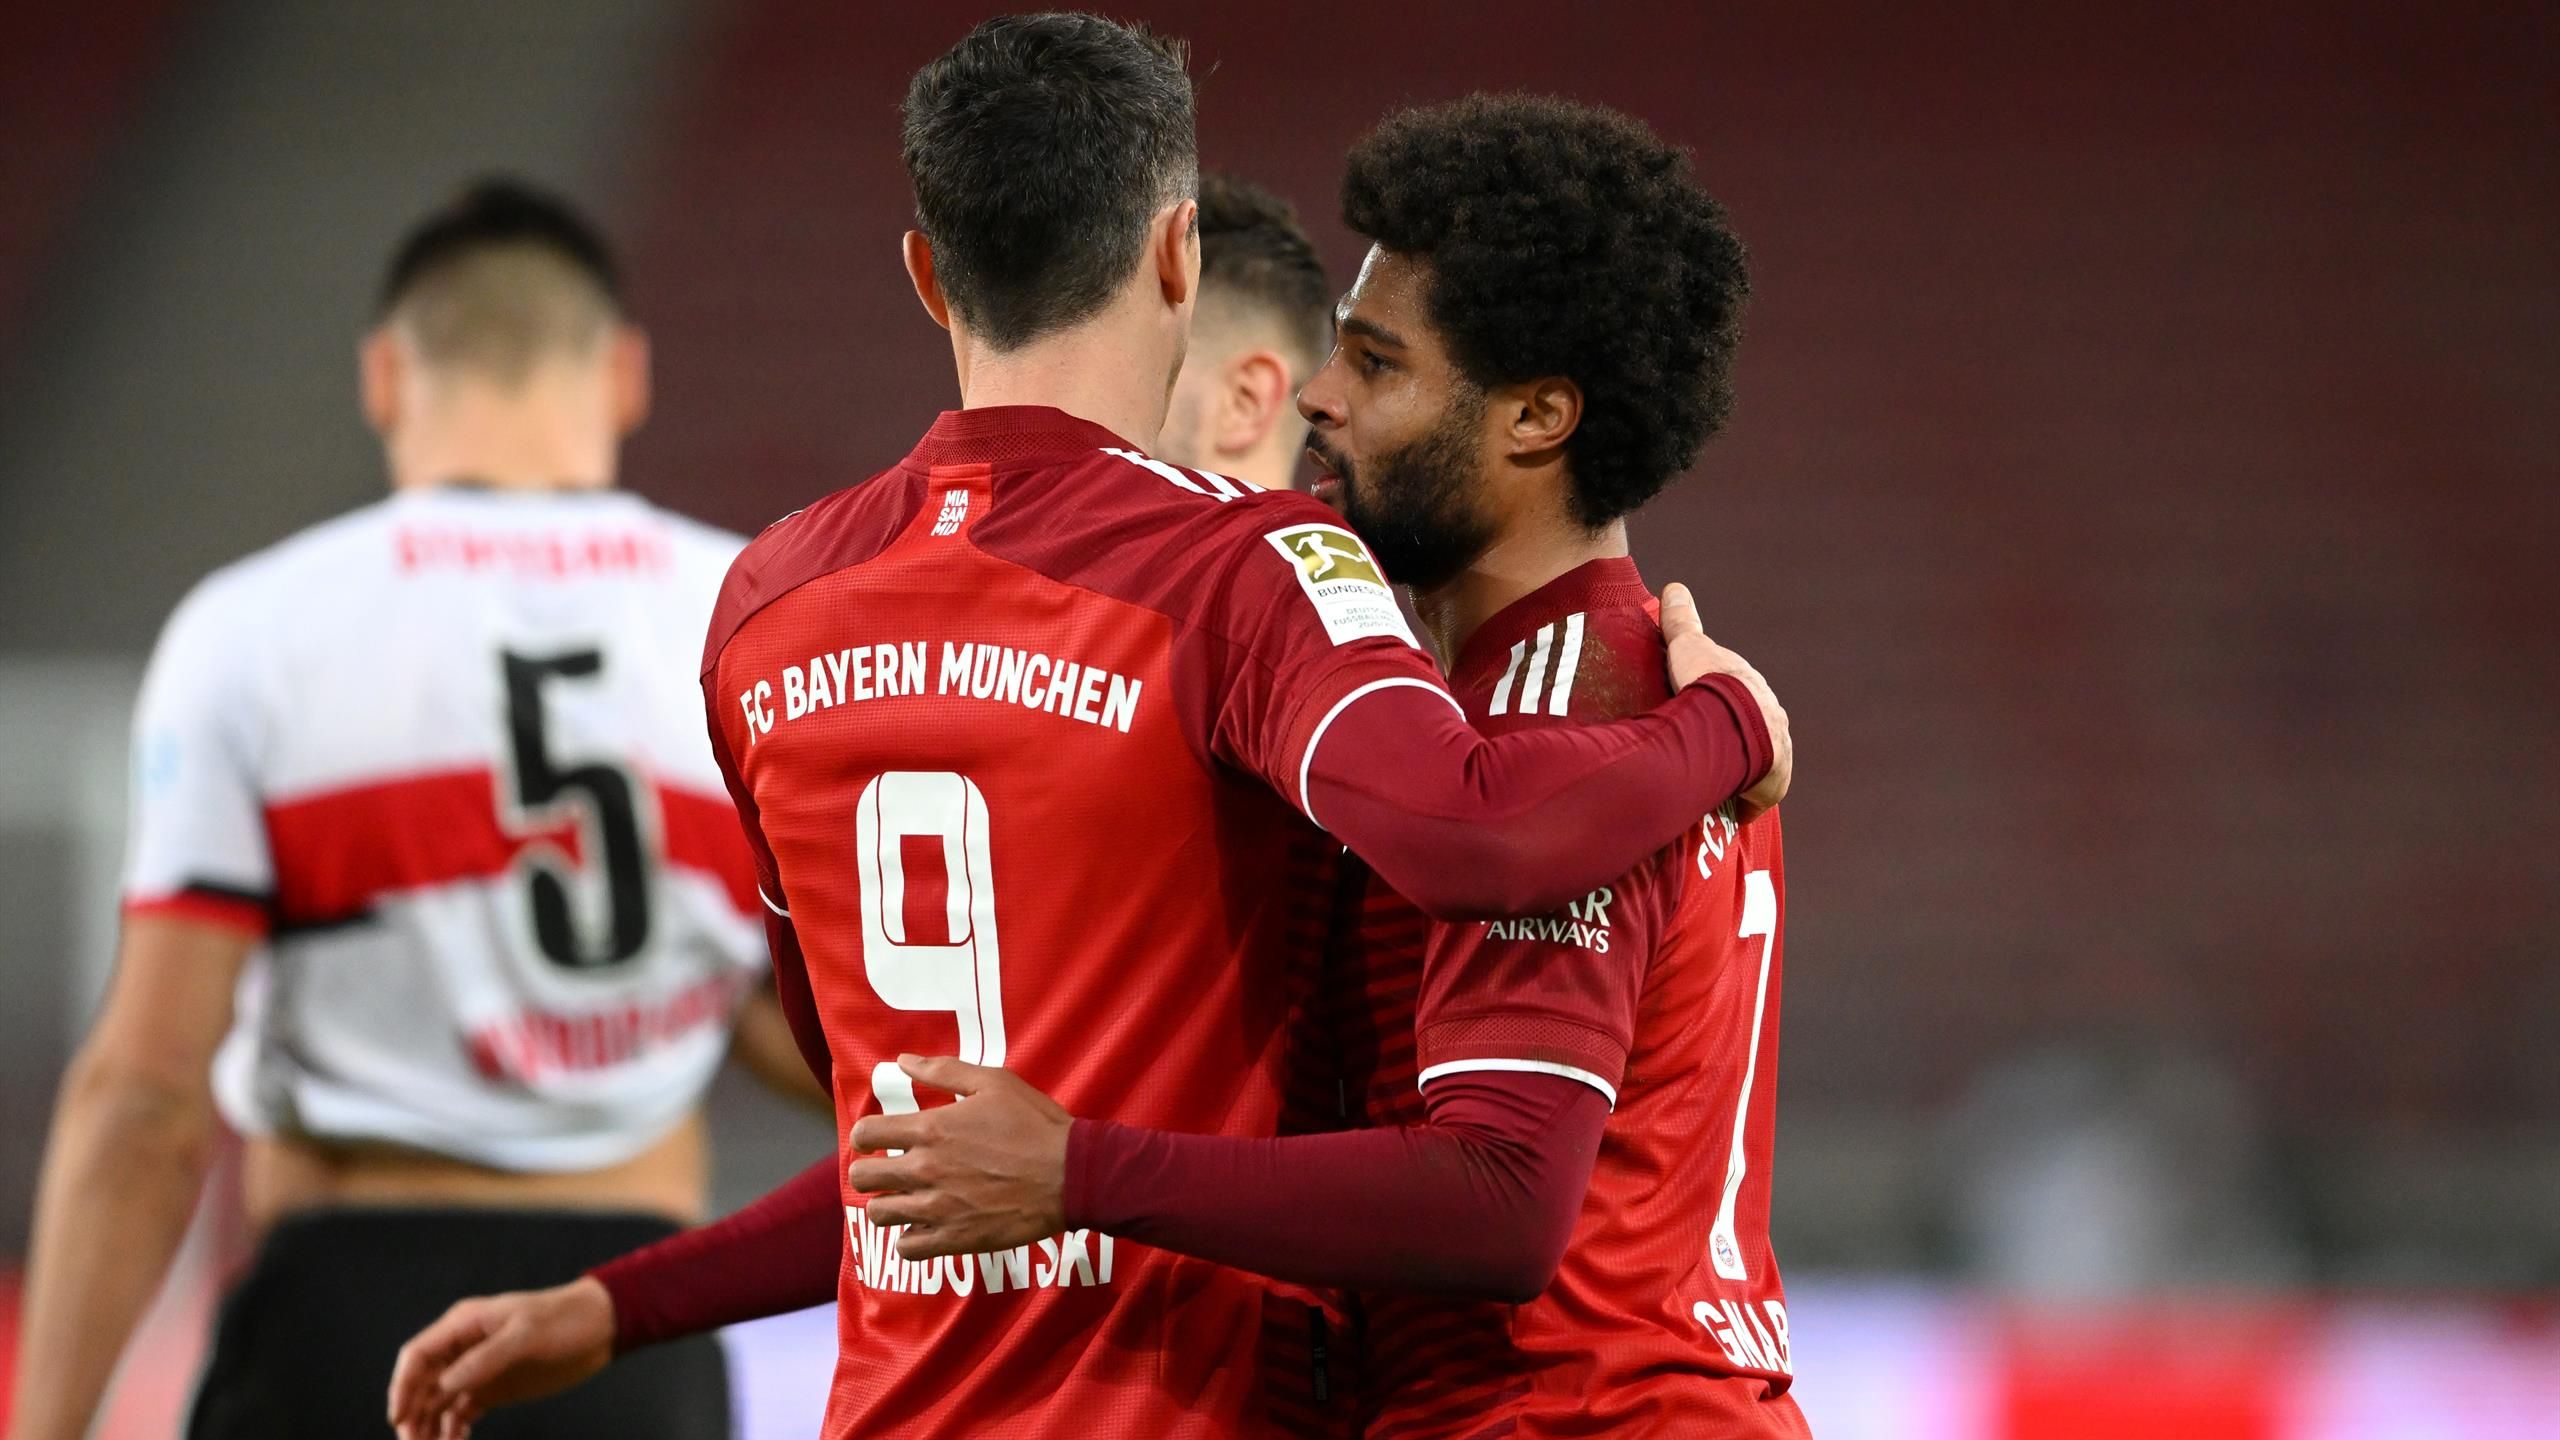 dikte Huh President Stuttgart 0-5 Bayern Munich: Serge Gnabry scores a hat-trick as visitors  fire five past hosts - Eurosport